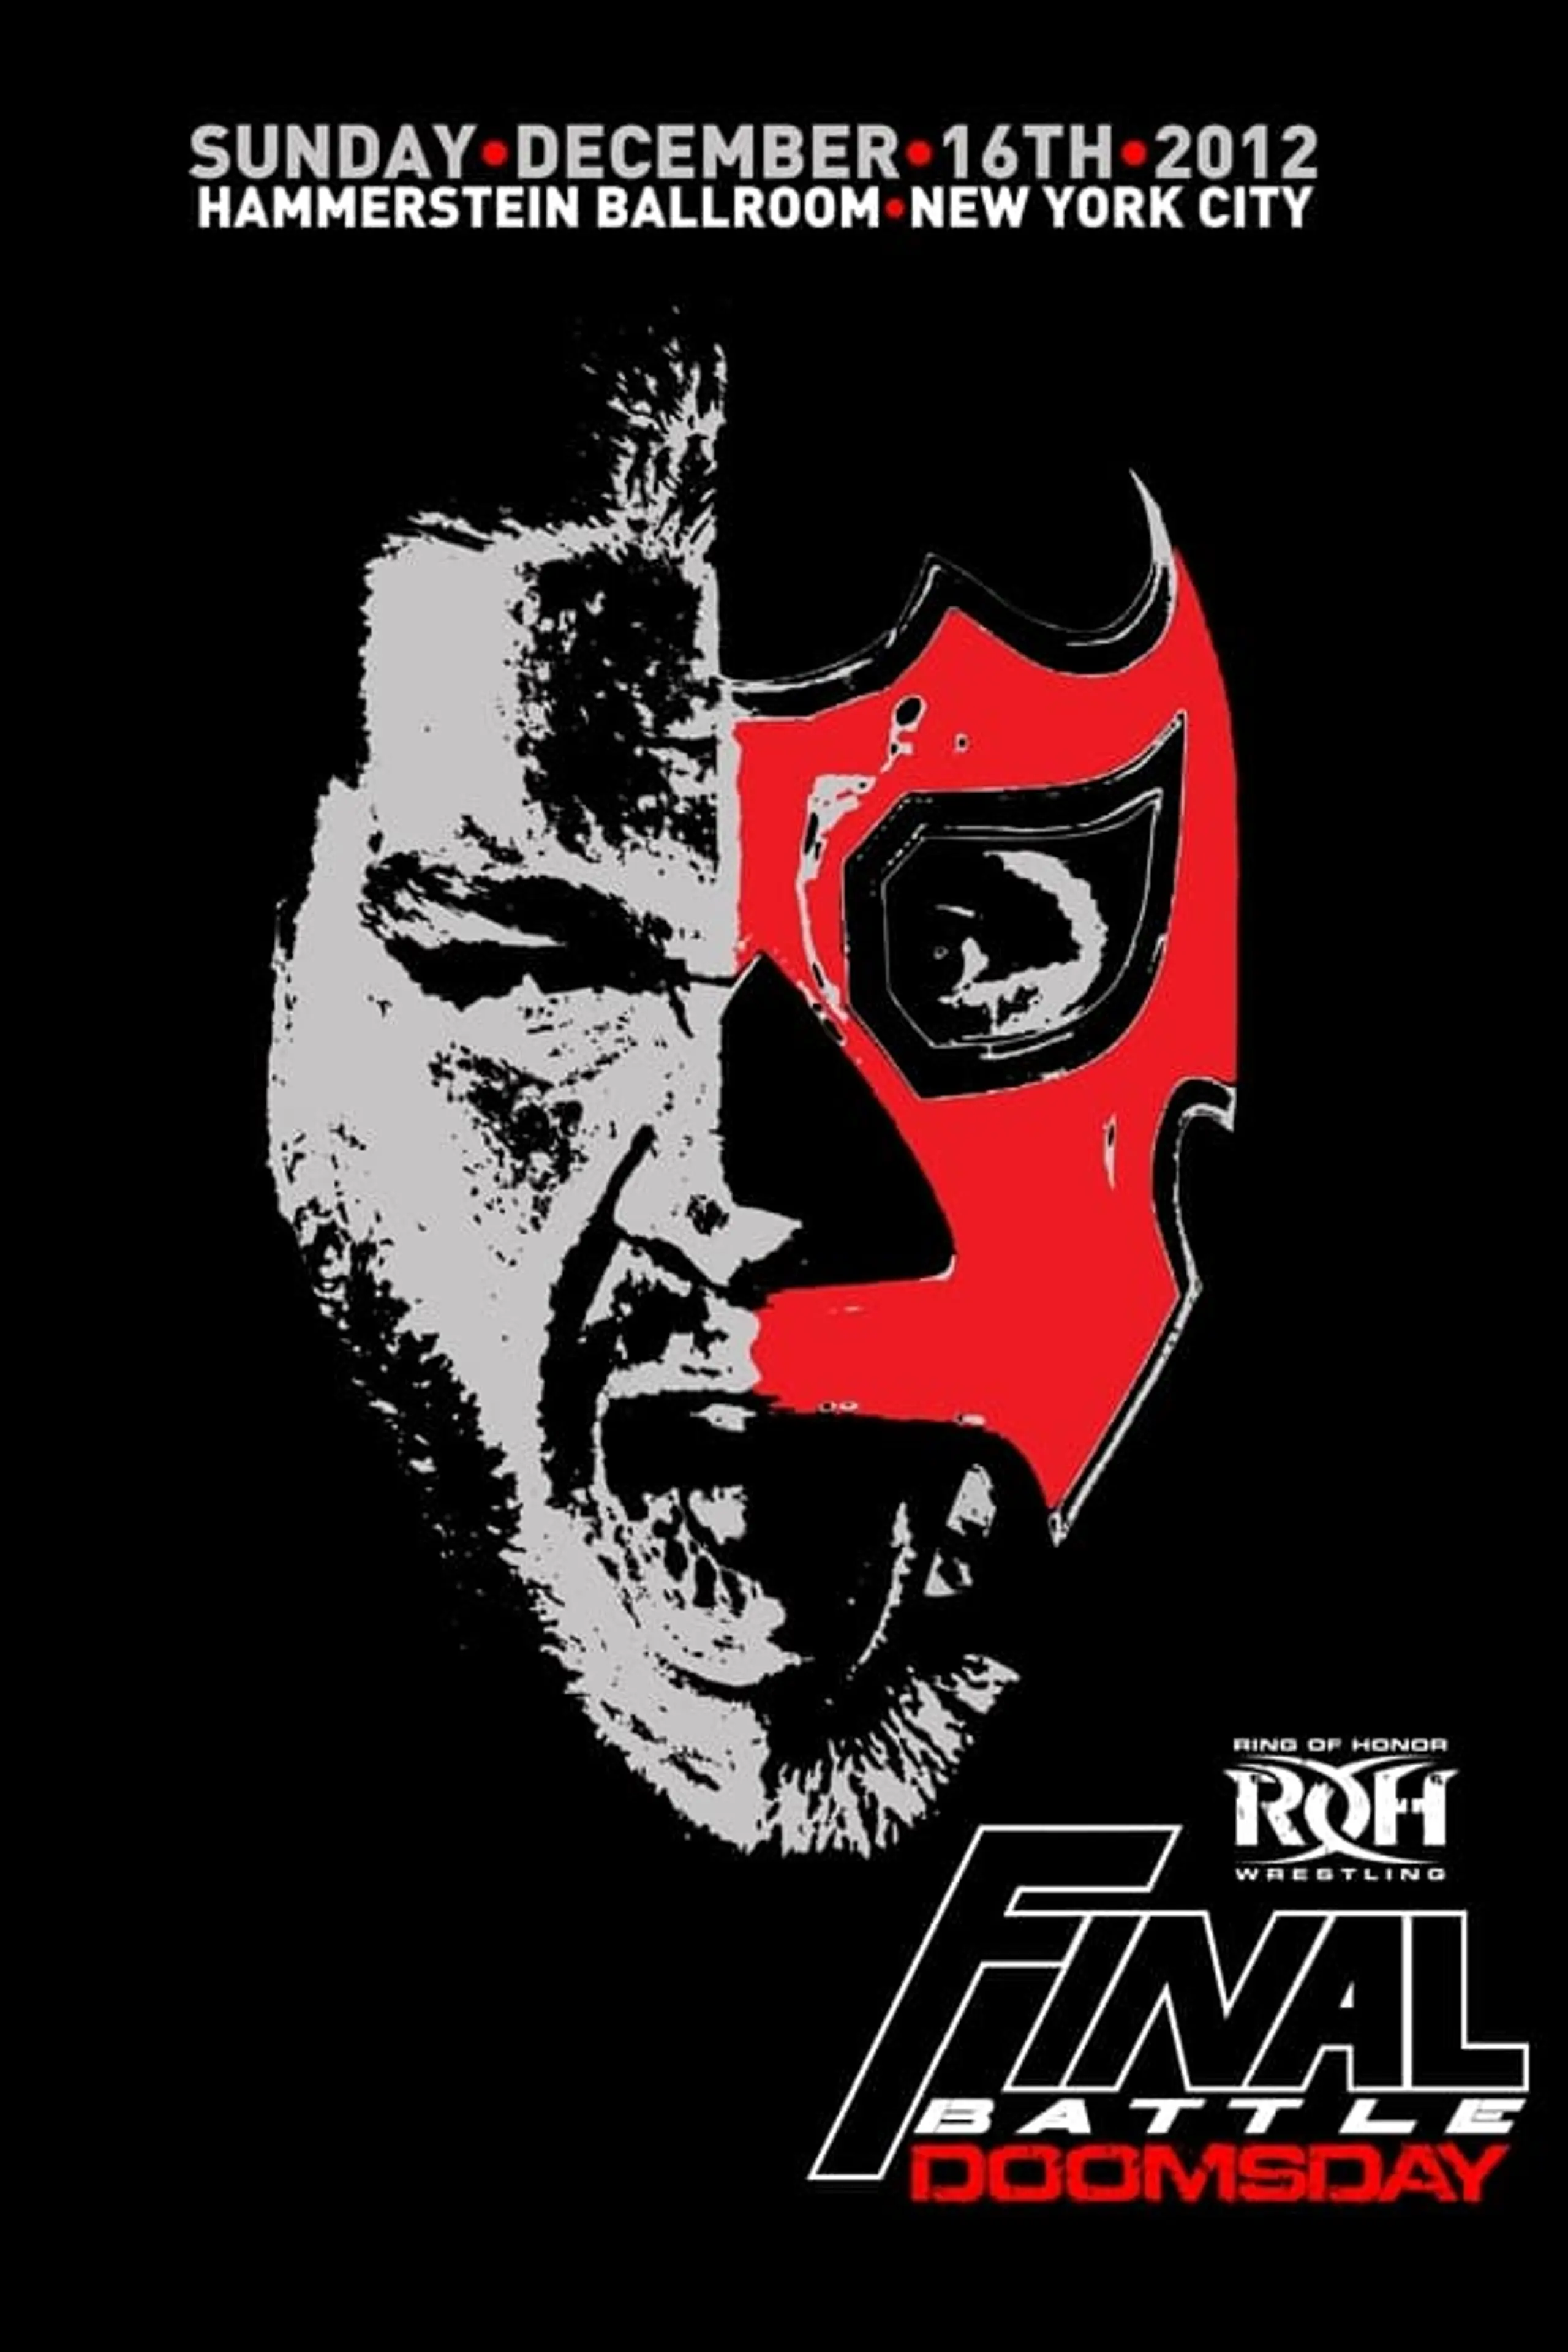 ROH Final Battle 2012: Doomsday